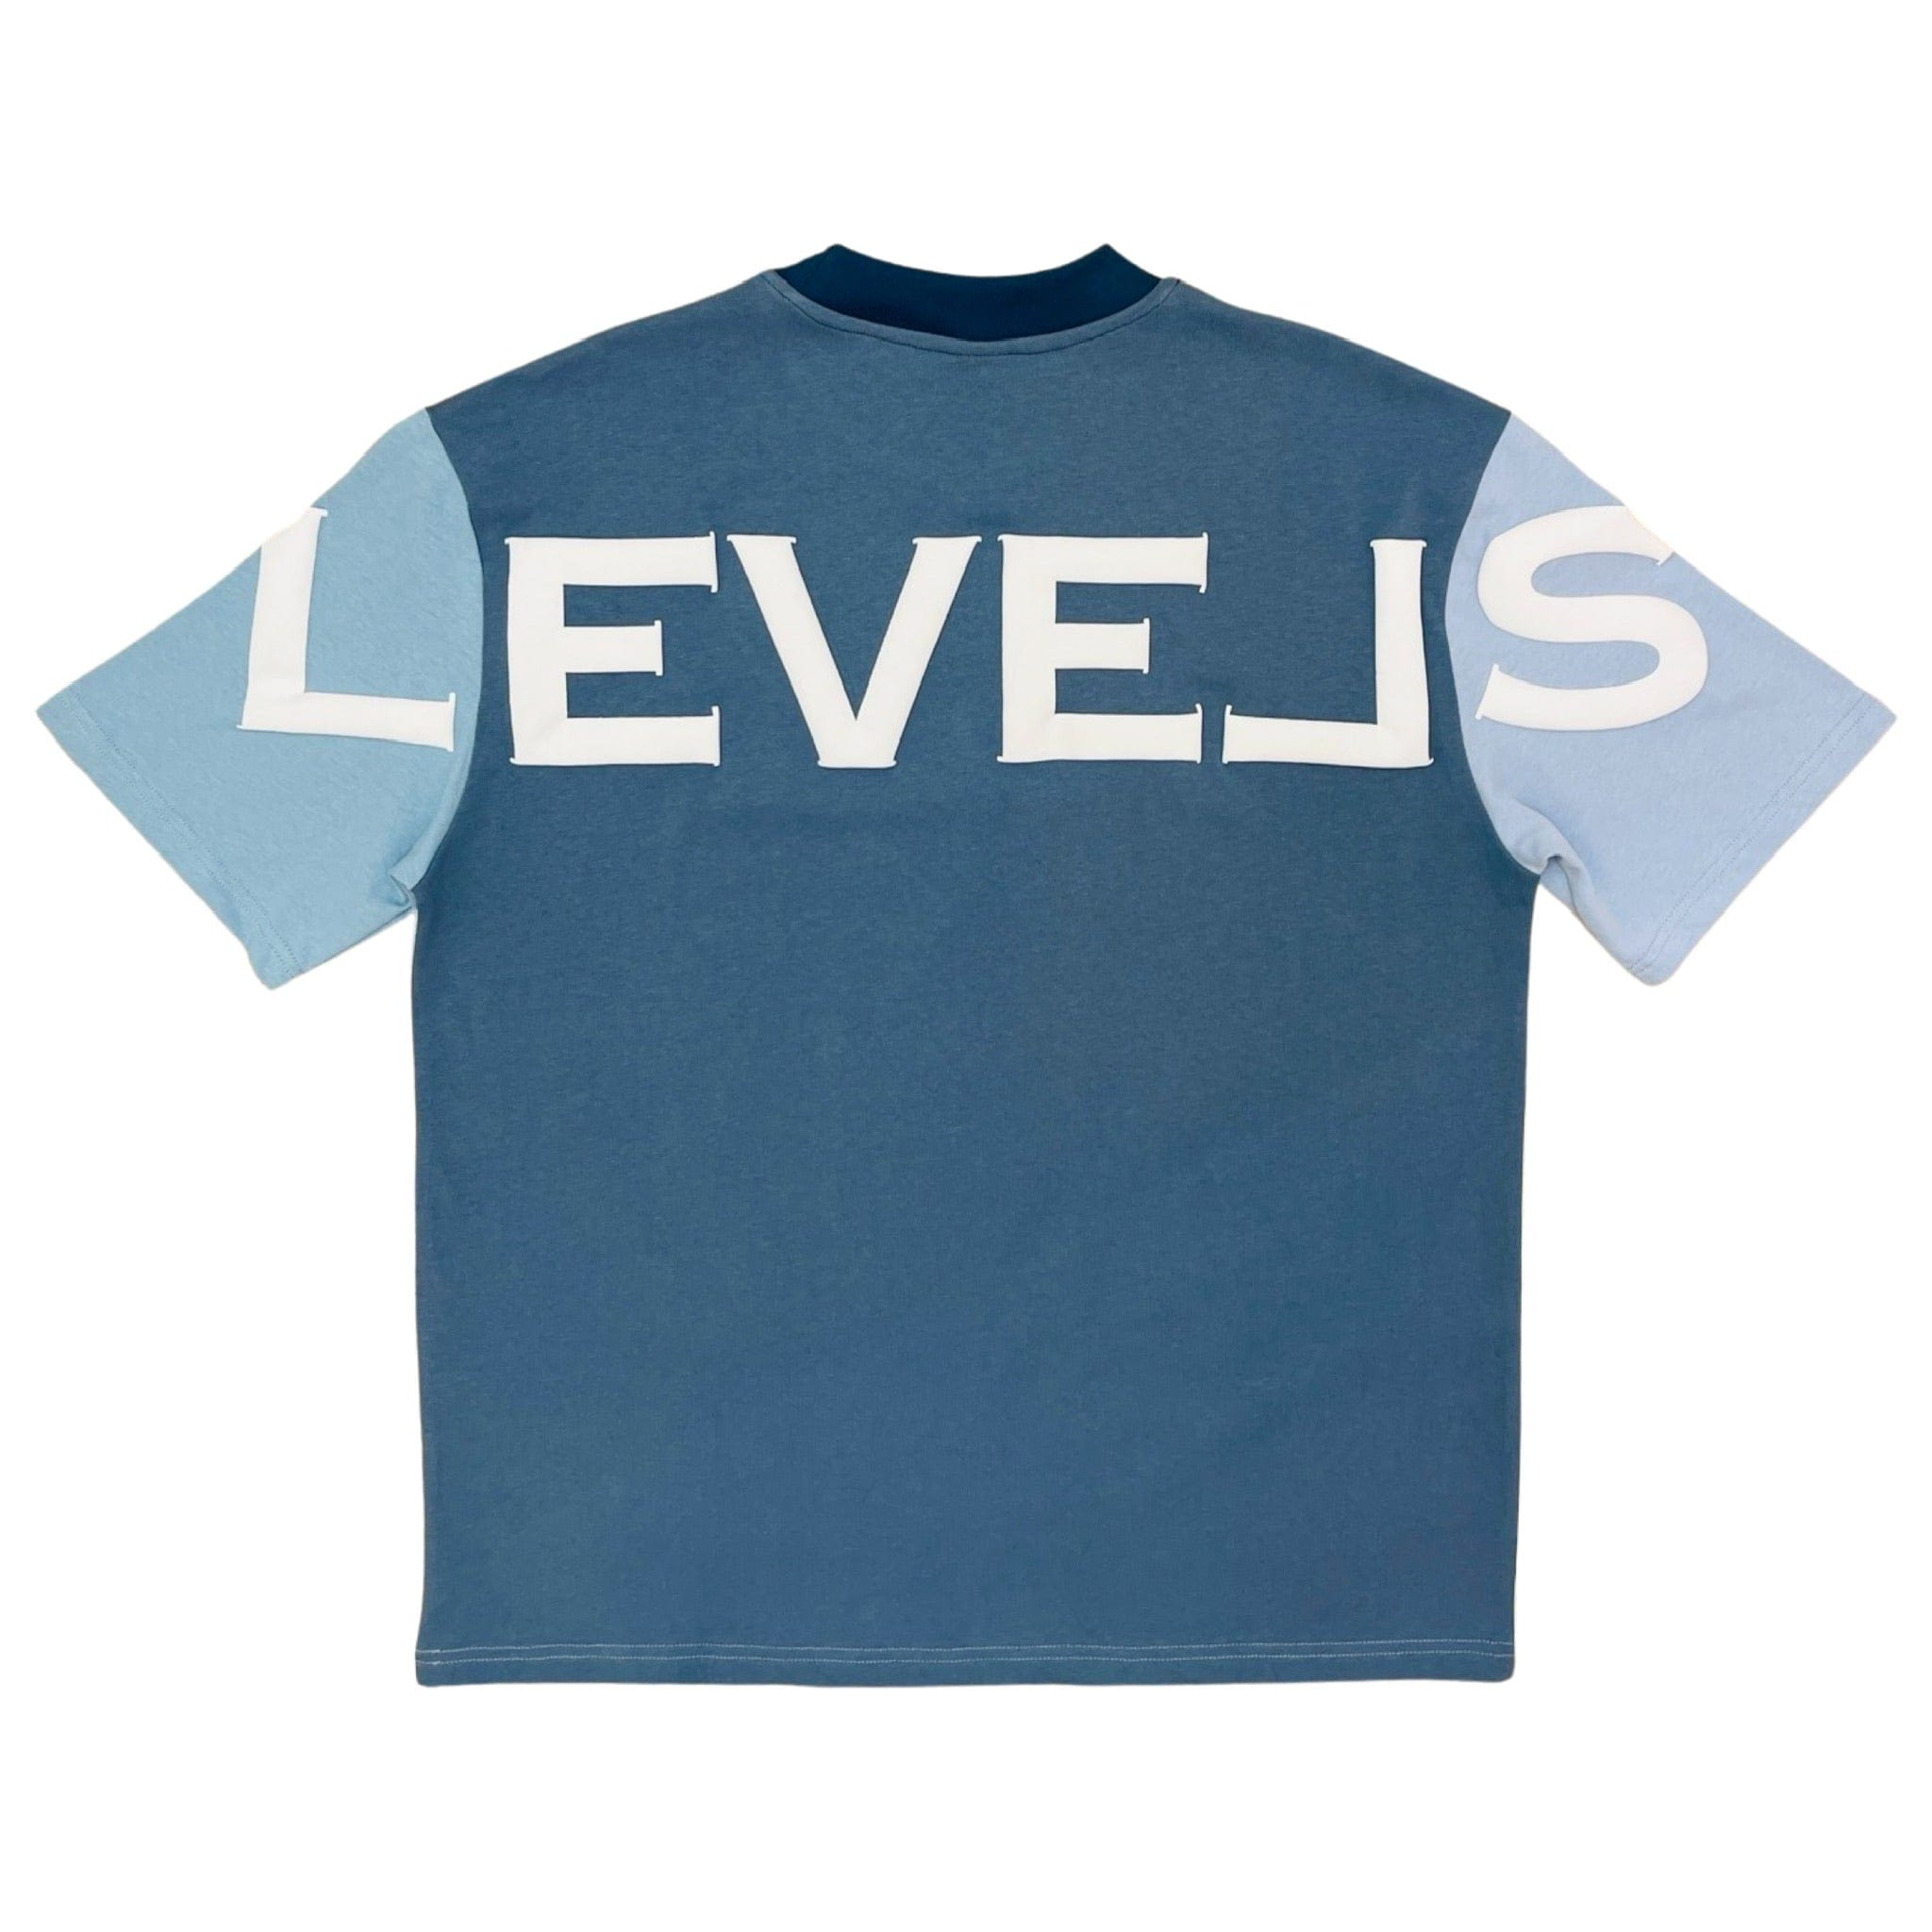 LEVELS, LLC OVERSIZE TEE EXCLUSIVE OVERSIZED TEE (MULTI BLUE)